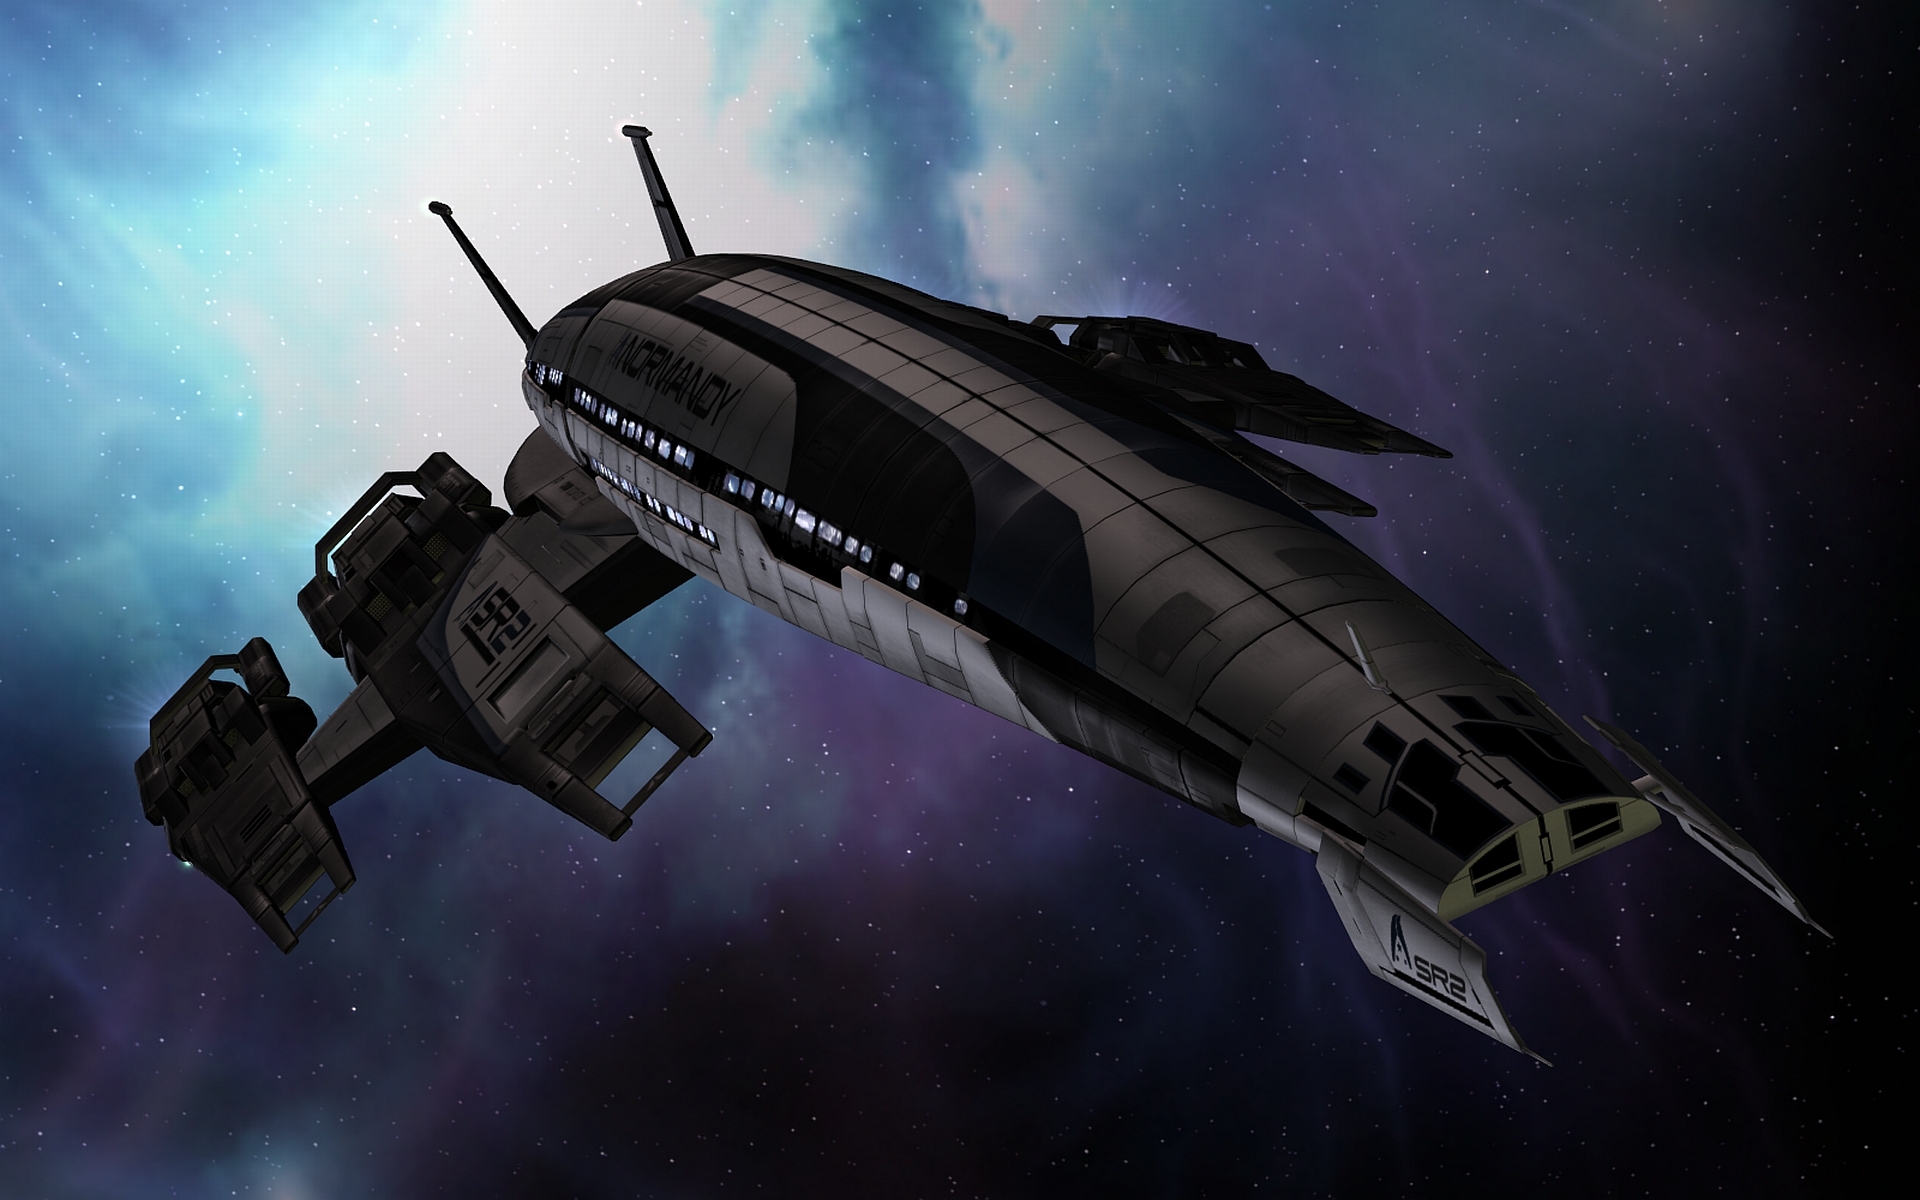 Normandy Sr Mass Effect Space Ship